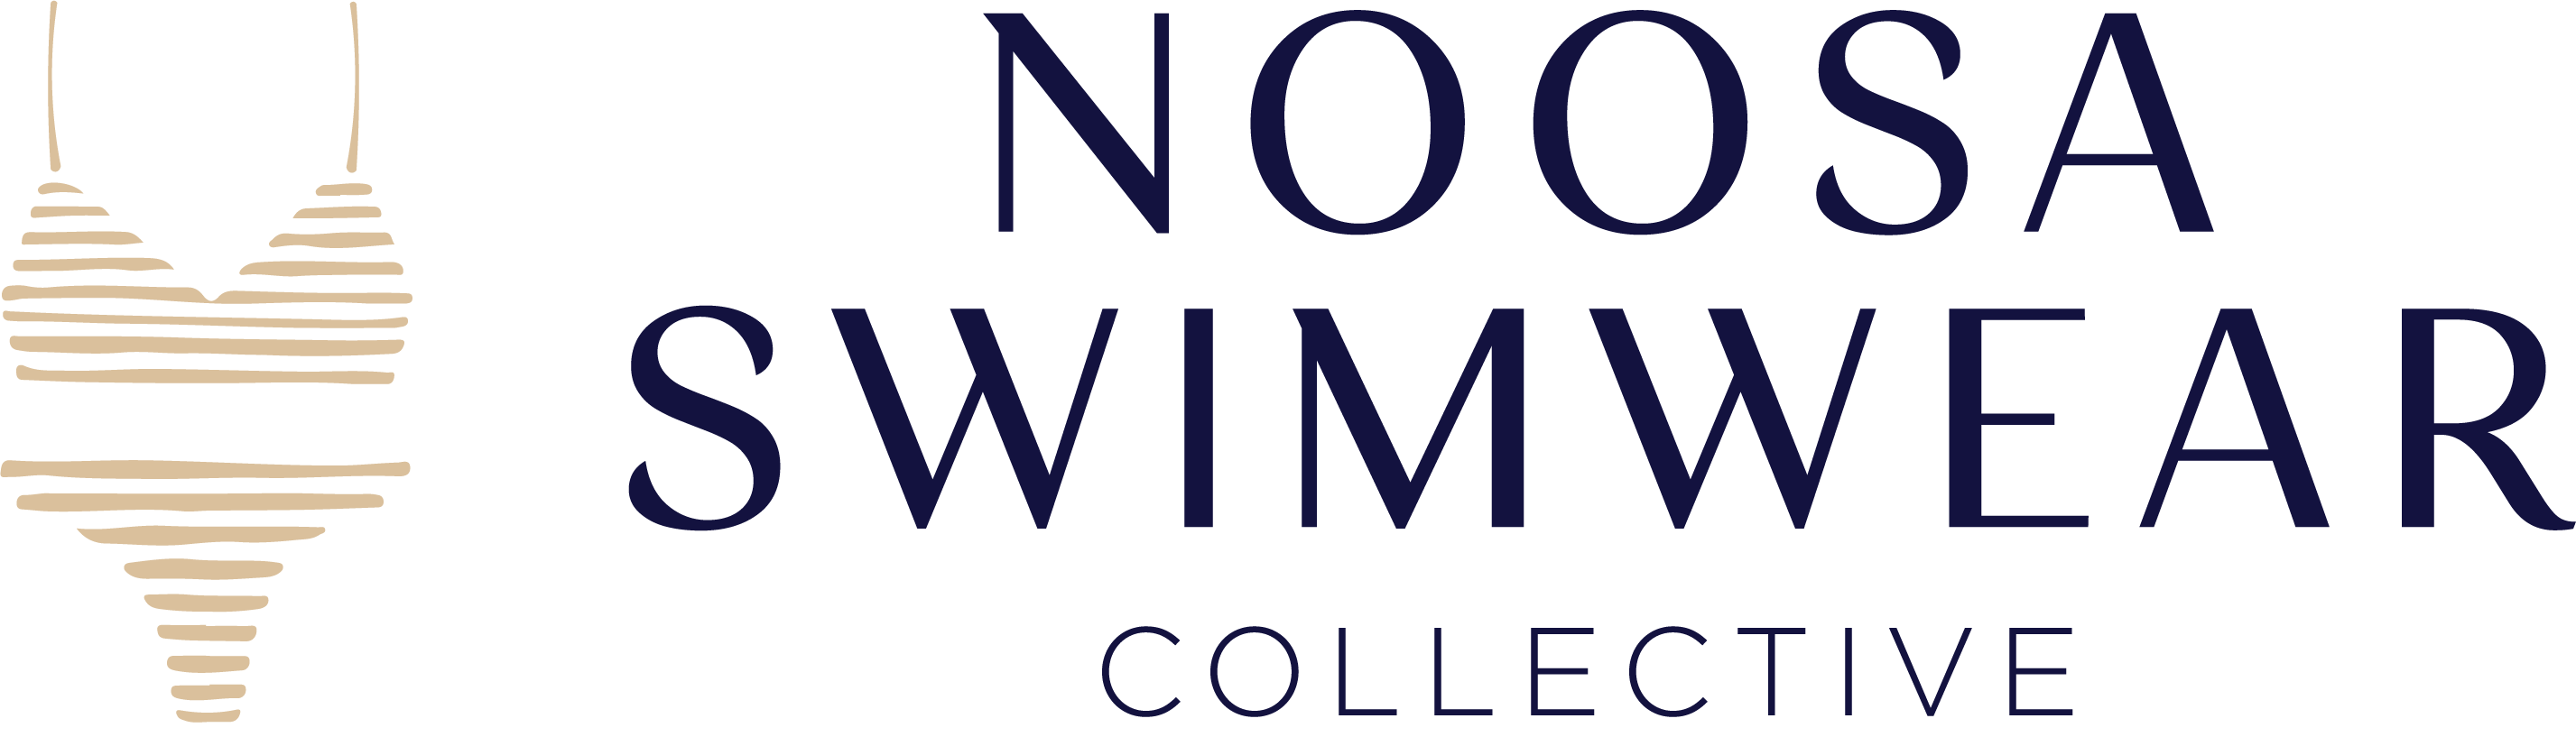 Noosa Swimwear Collective logo